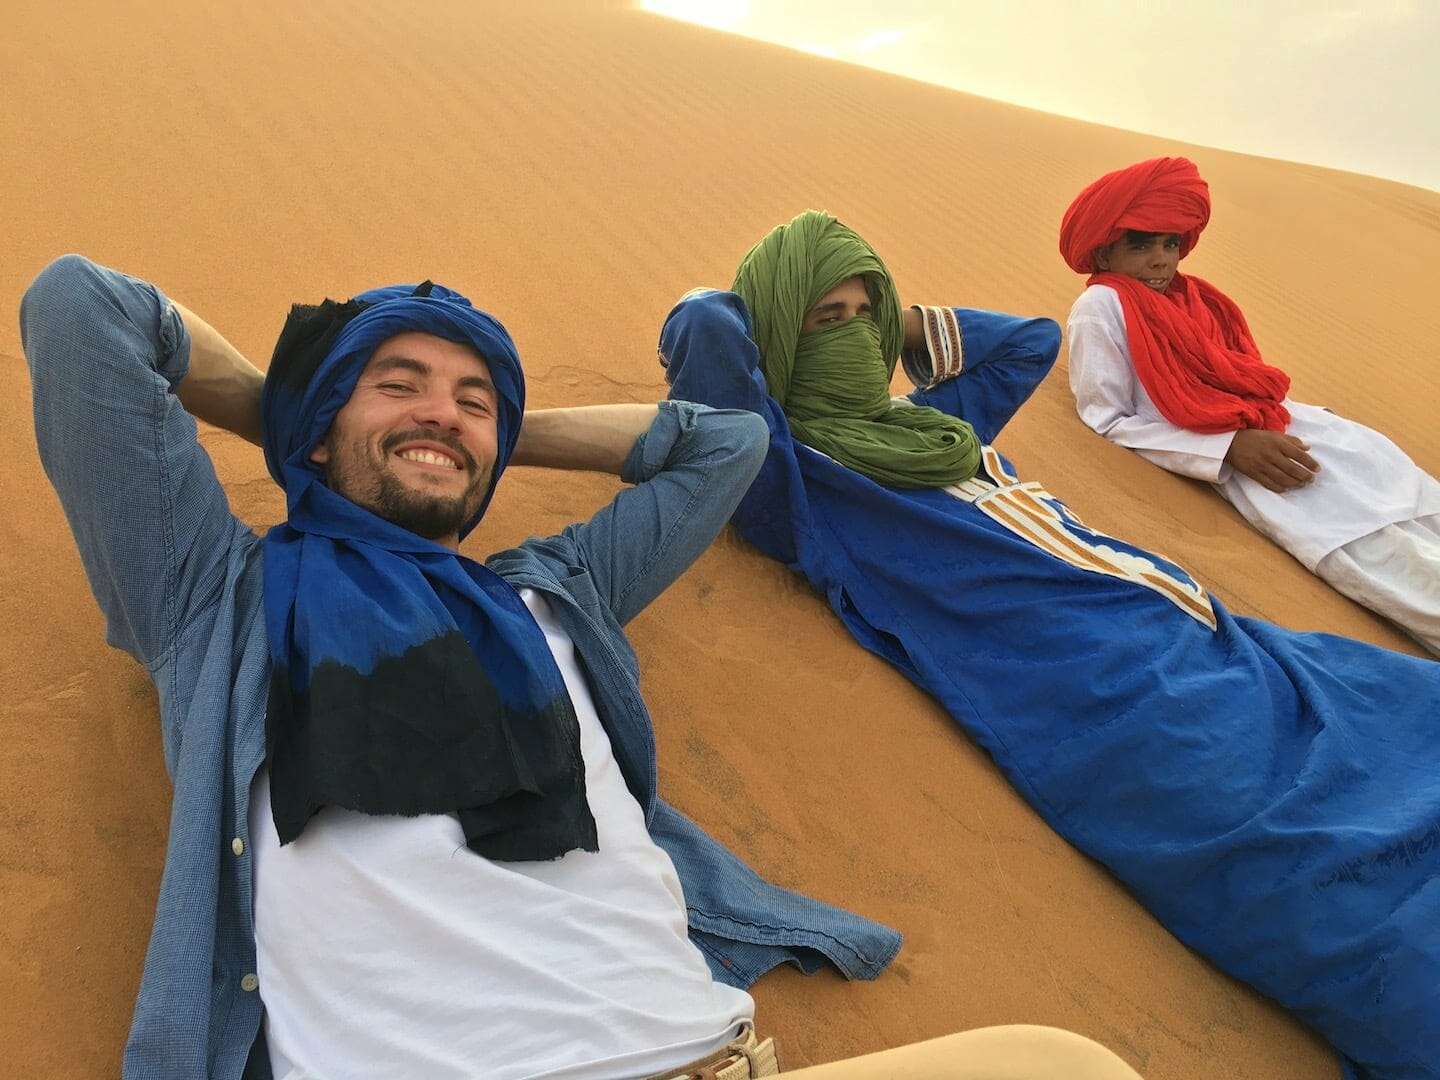 berberes maroc,
the desert of Morocco